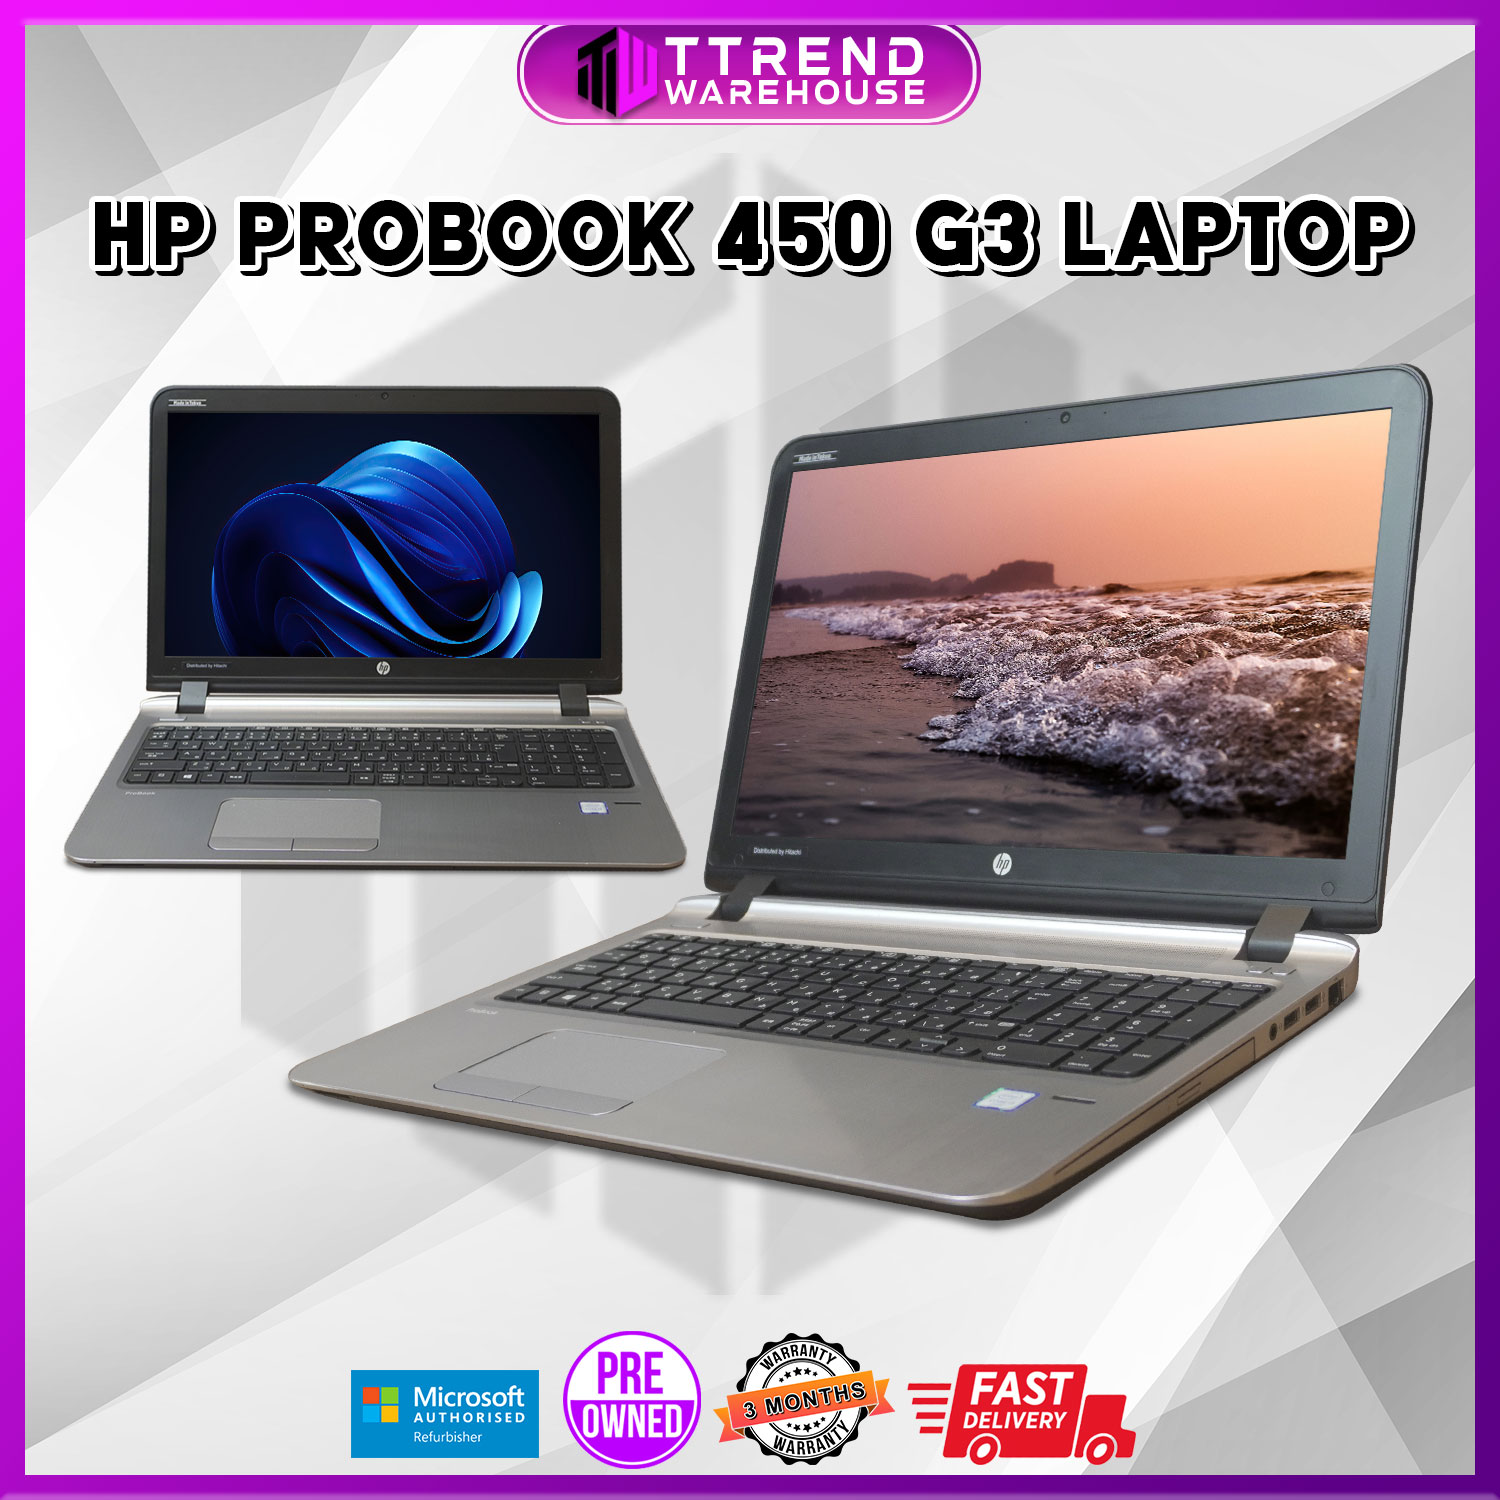 HP PROBOOK 450 G3 LAPTOP | Intel Core i3 6th Gen / 4GB RAM / 120GB